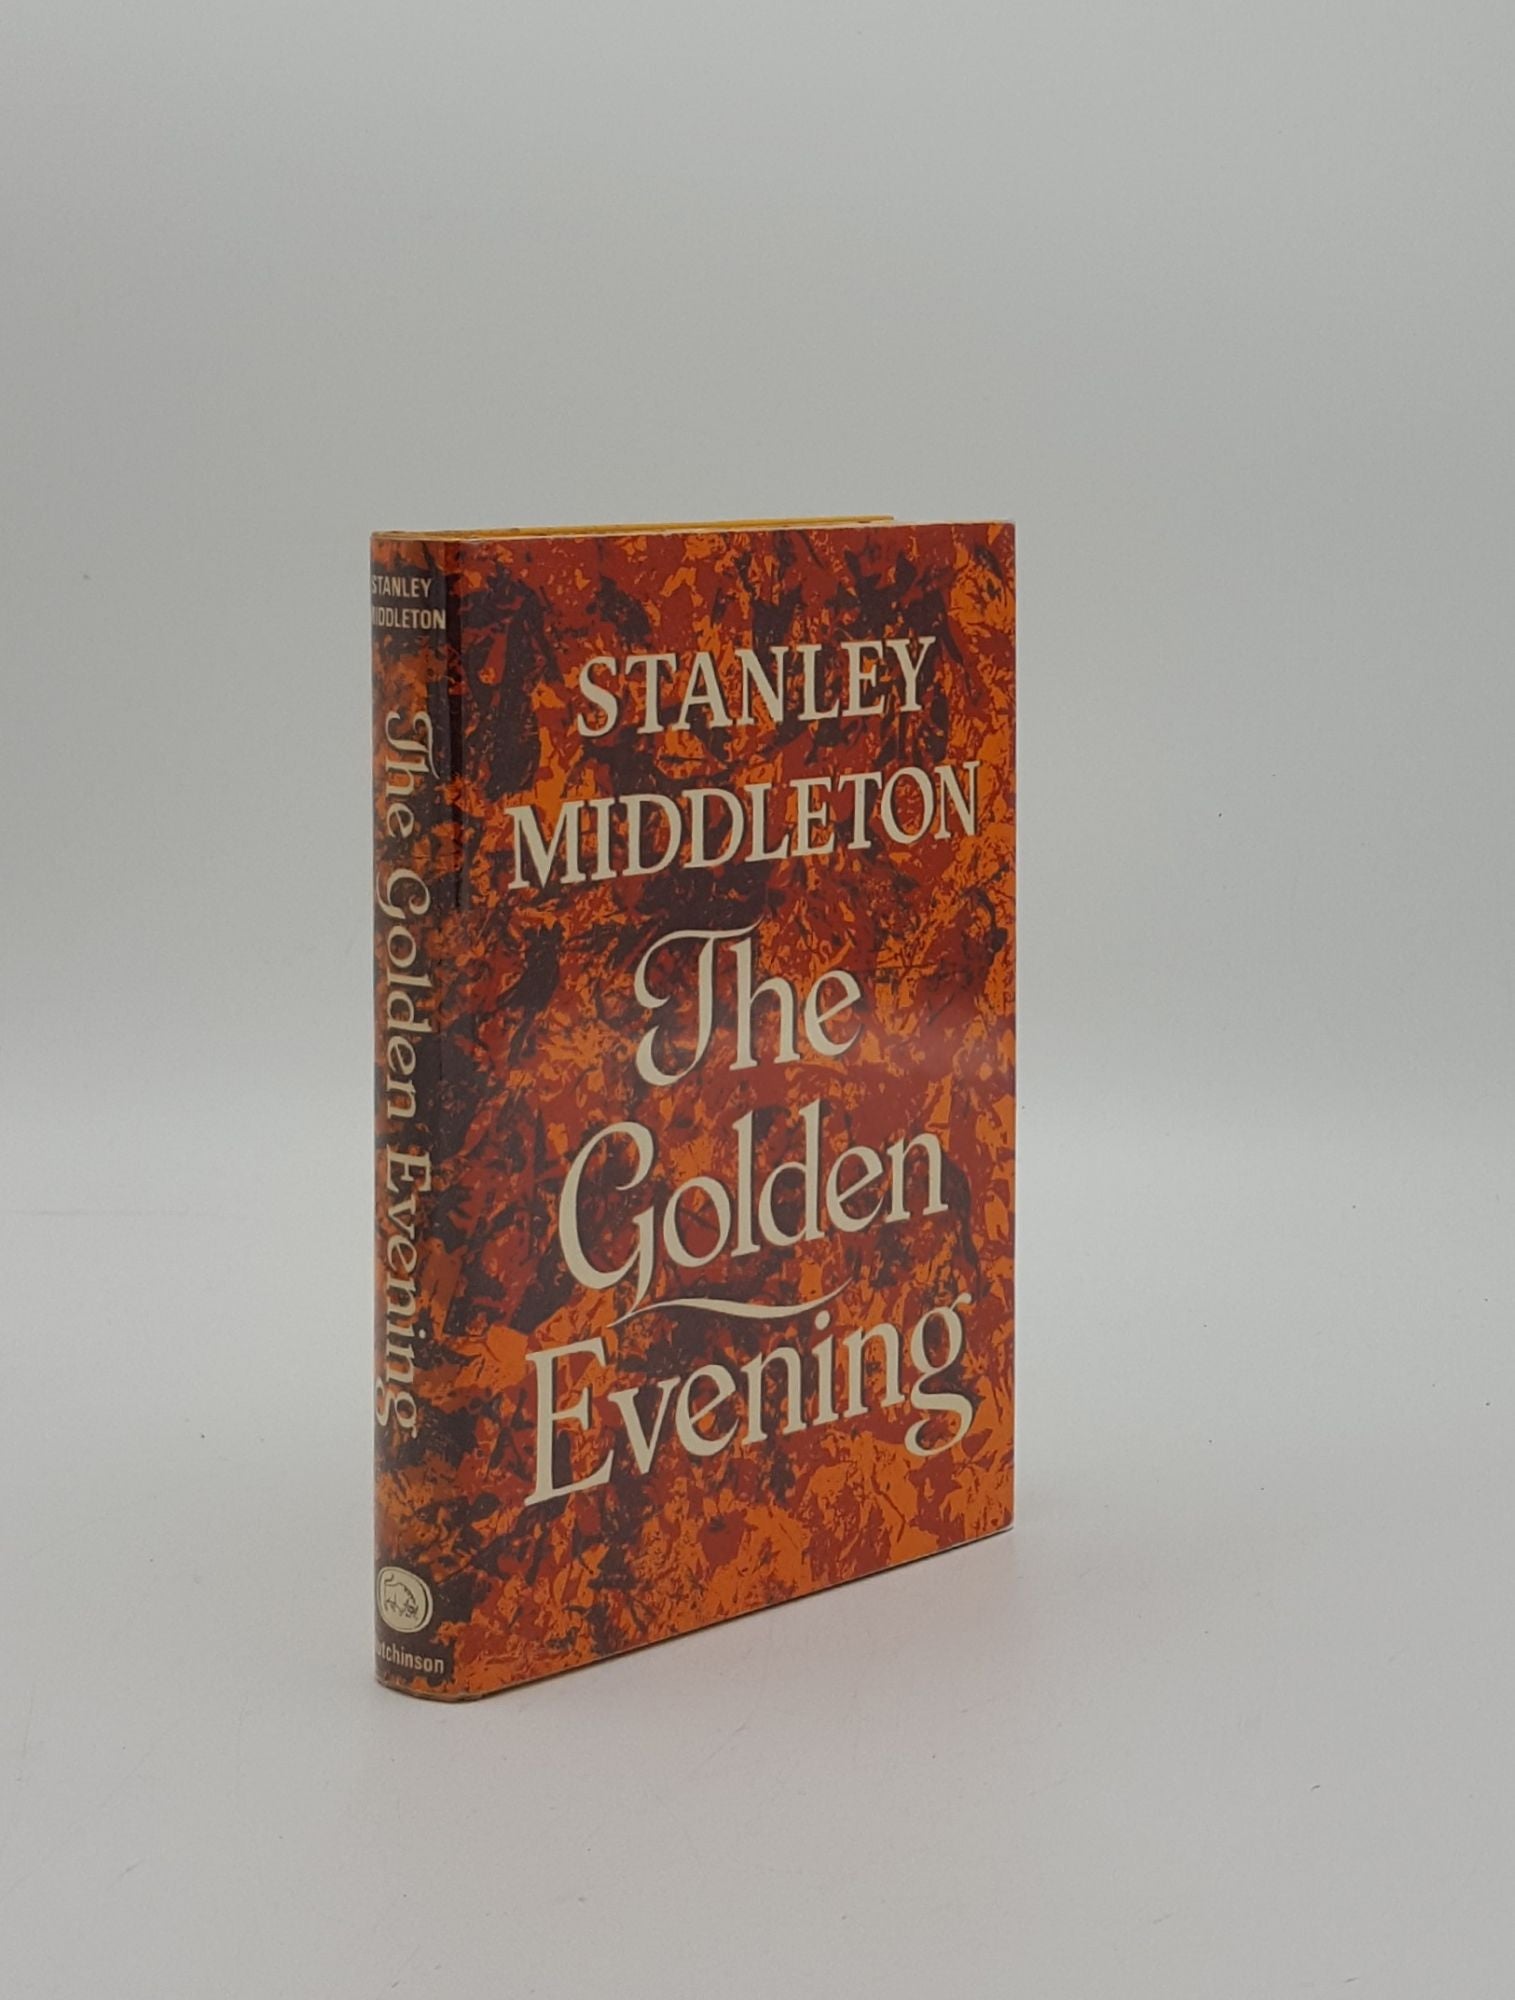 MIDDLETON Stanley - The Golden Evening